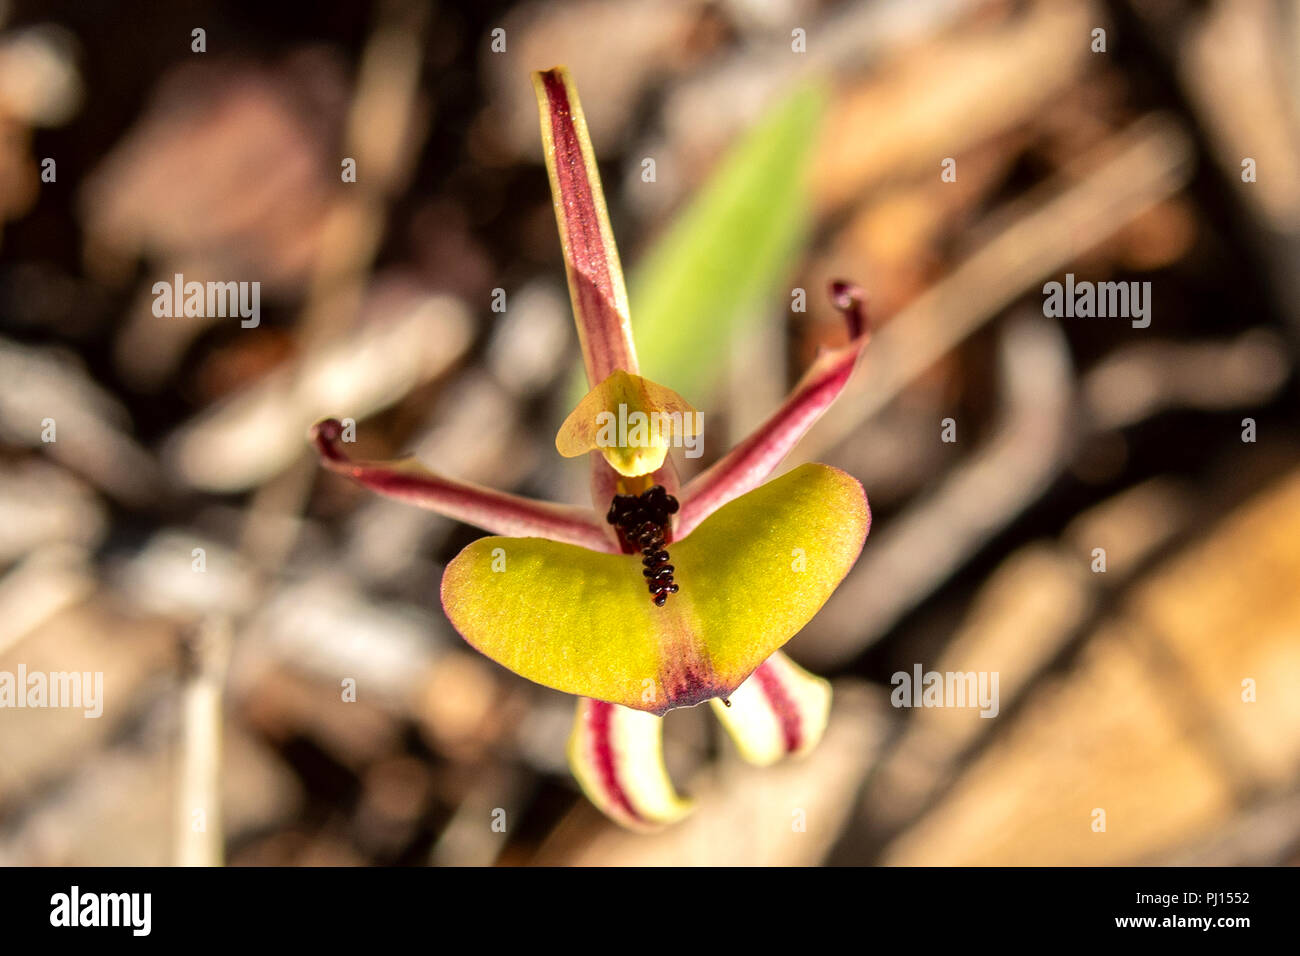 Caladenia roei, Ant Orchid Stock Photo